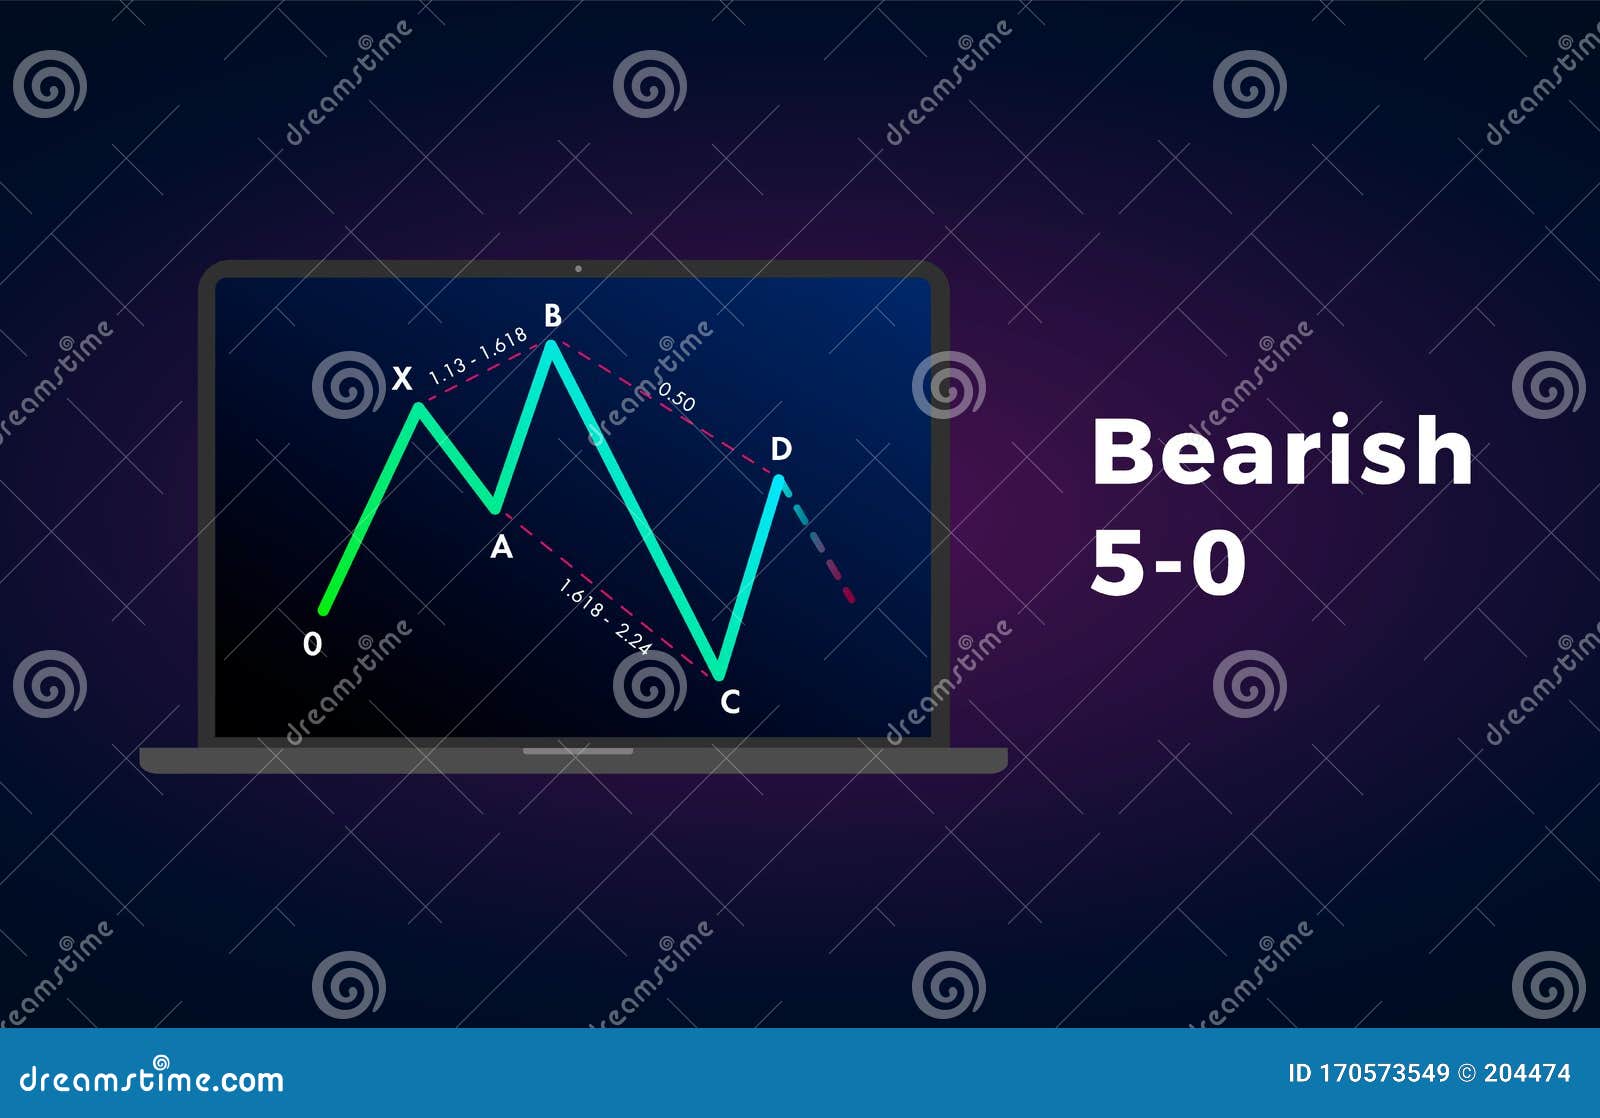 Bearish 5-0 - Harmonic Patterns With Bearish Formation ...